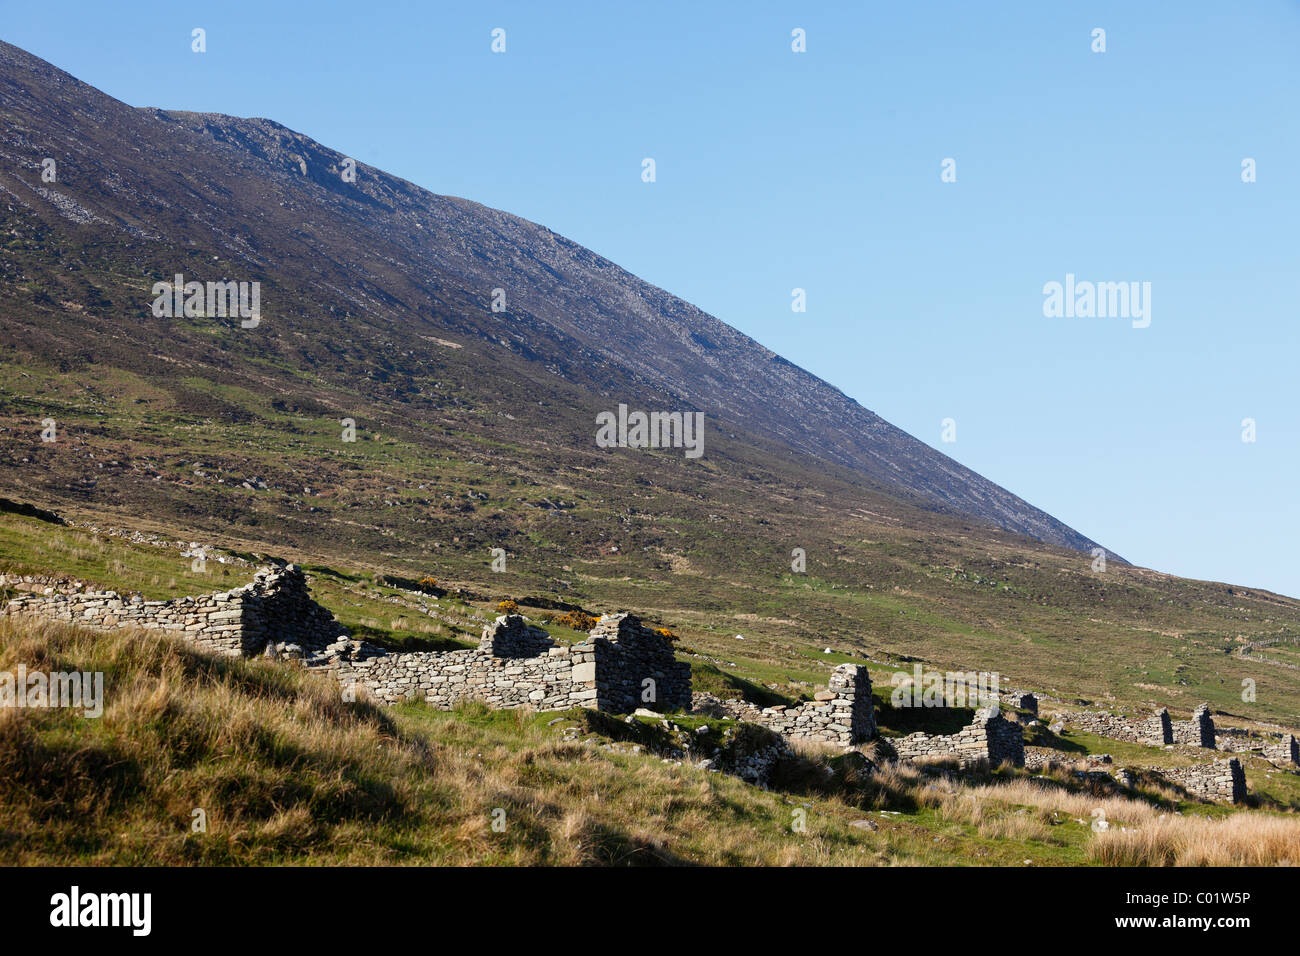 Deserted village of Slievemore, Achill Island, County Mayo, Connacht province, Republic of Ireland, Europe Stock Photo